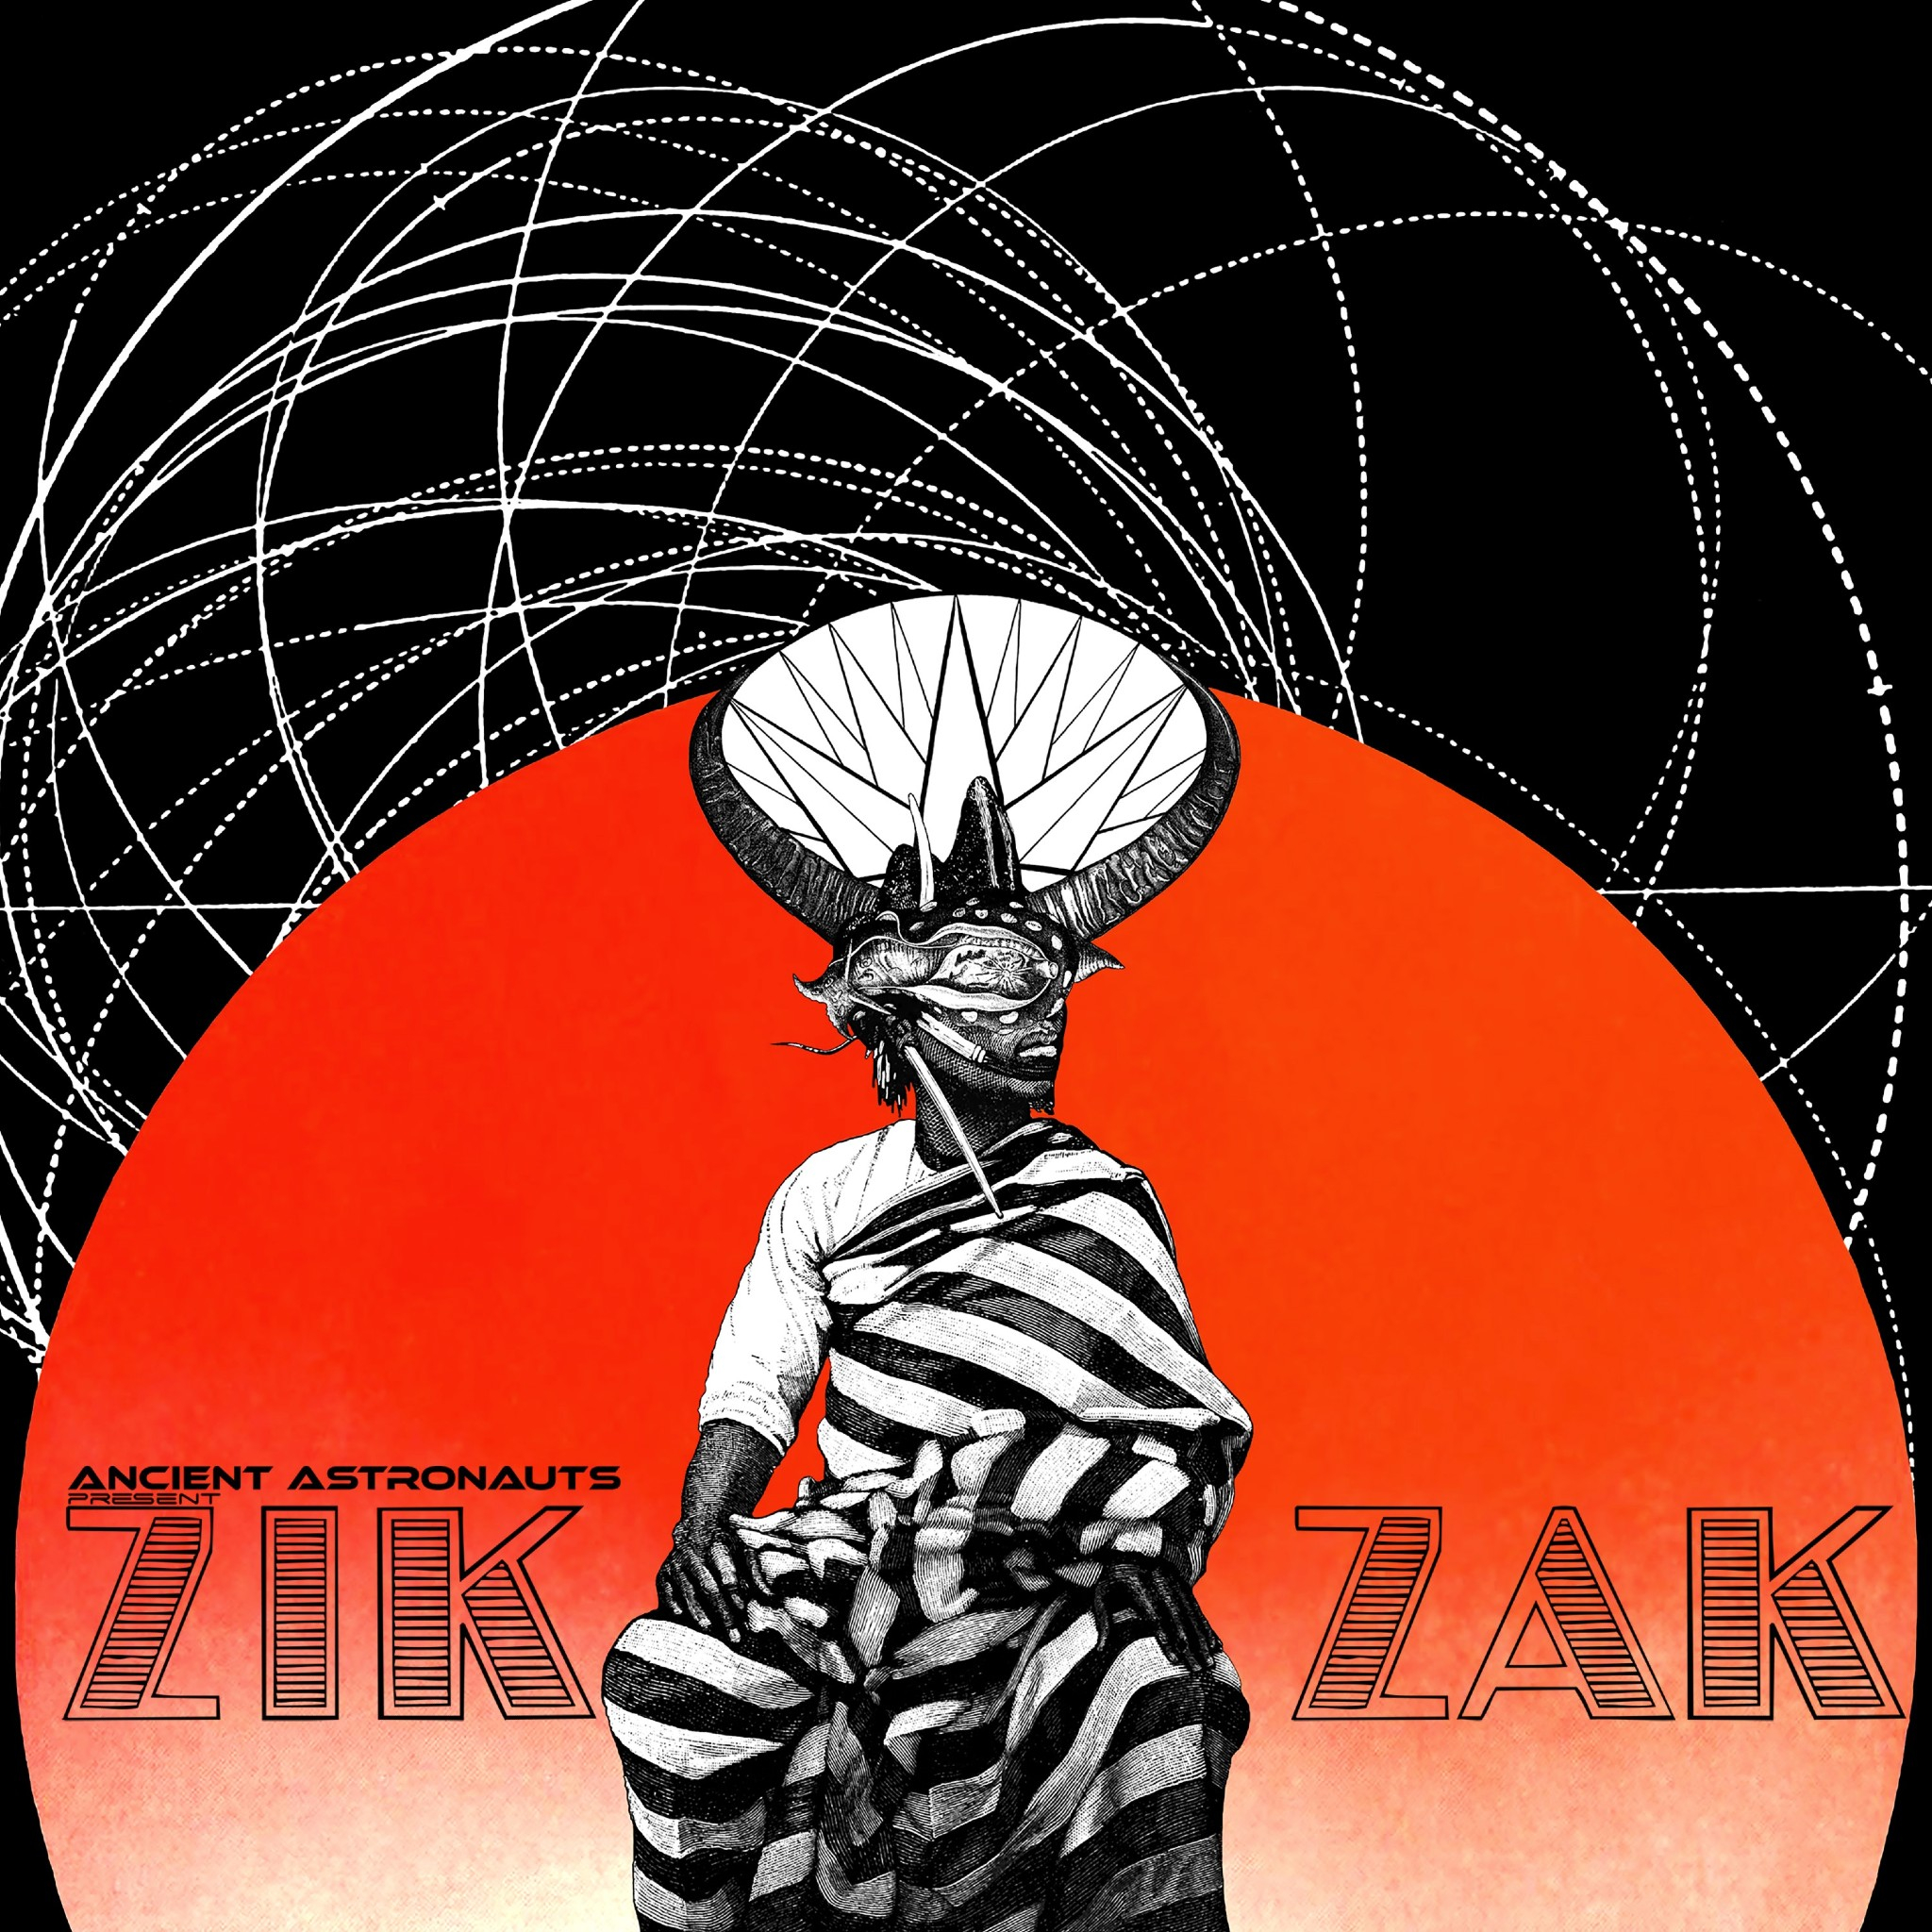 Ancient Astronauts - "Zik Zak"